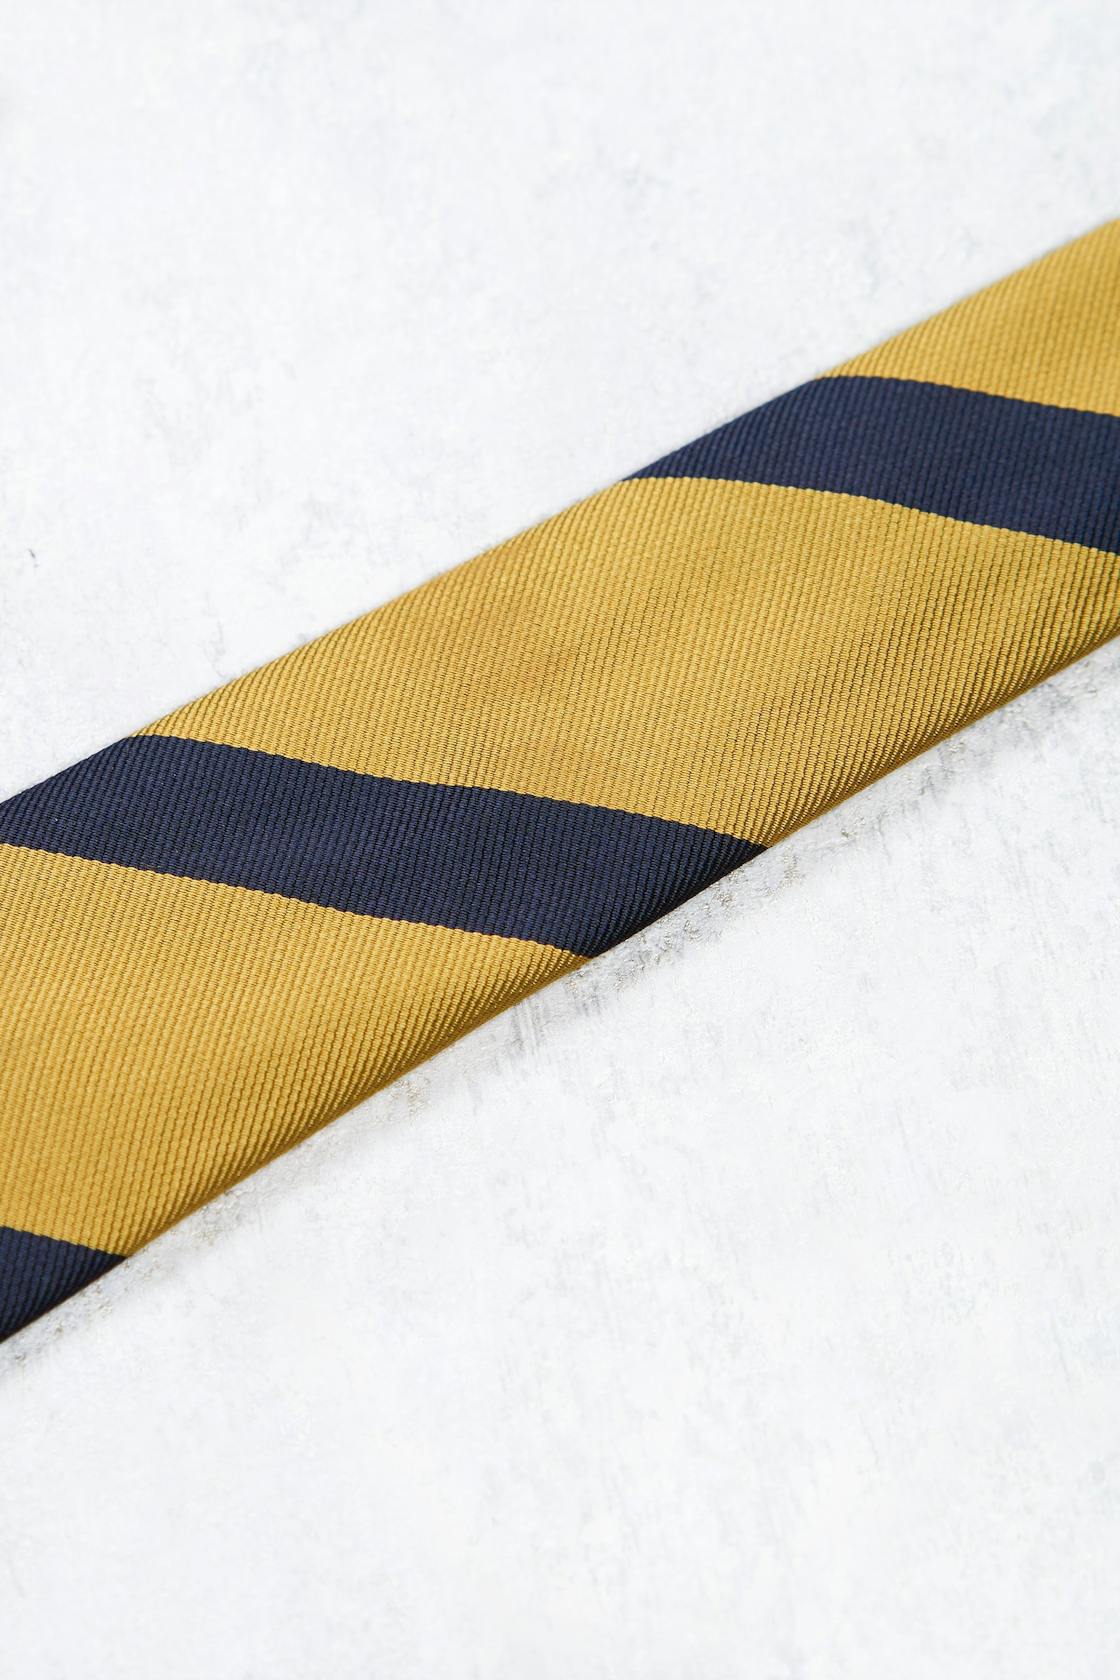 Seven Fold 30303 Gold with Navy Stripe Silk Seven-fold Tie